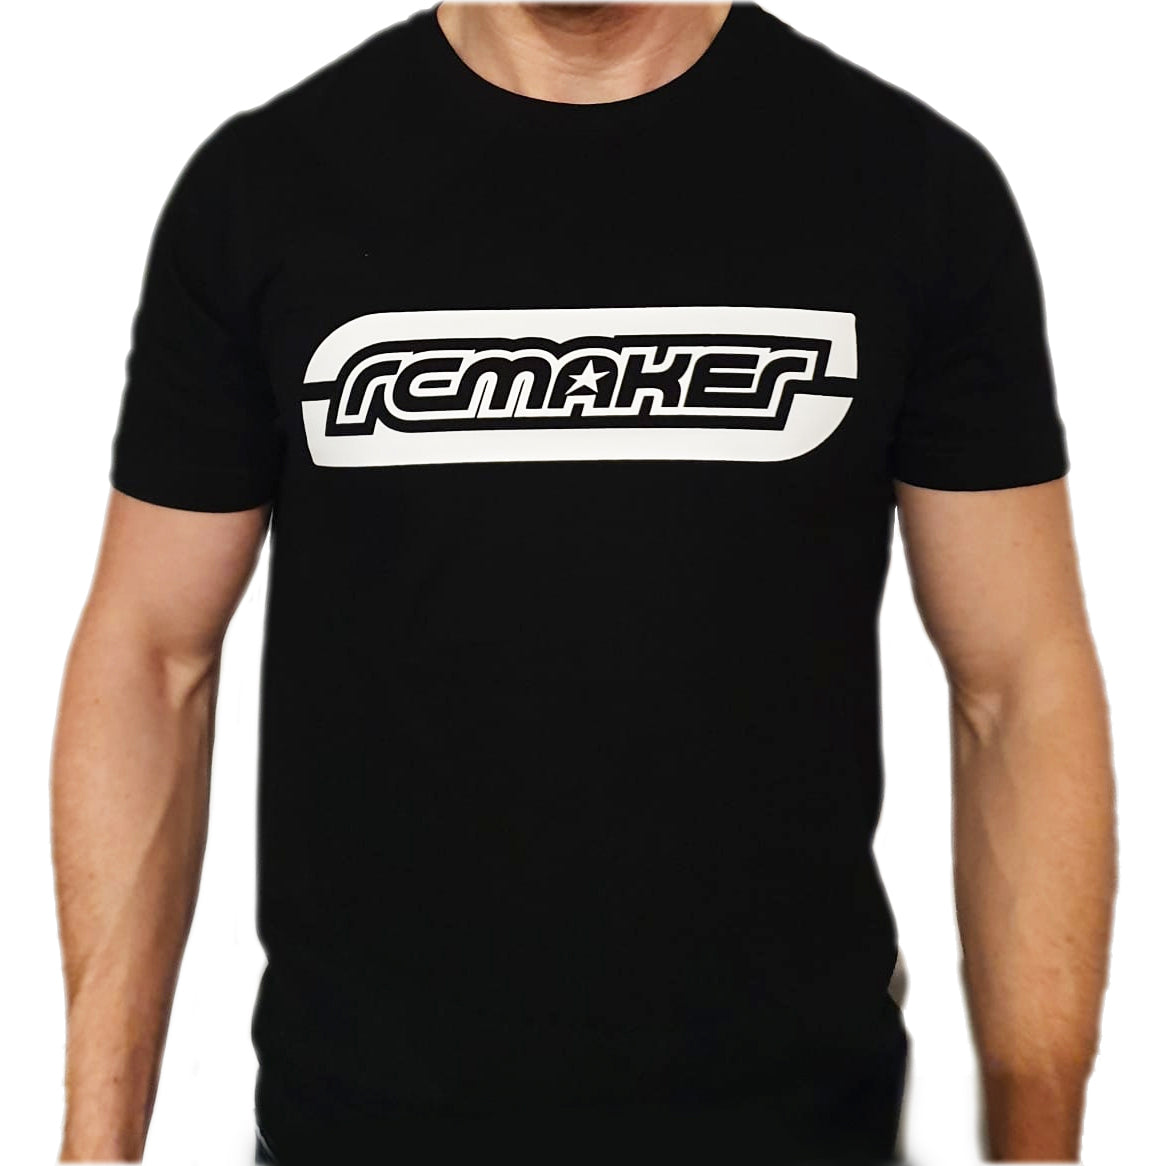 RC MAKER Team T-Shirt - Black